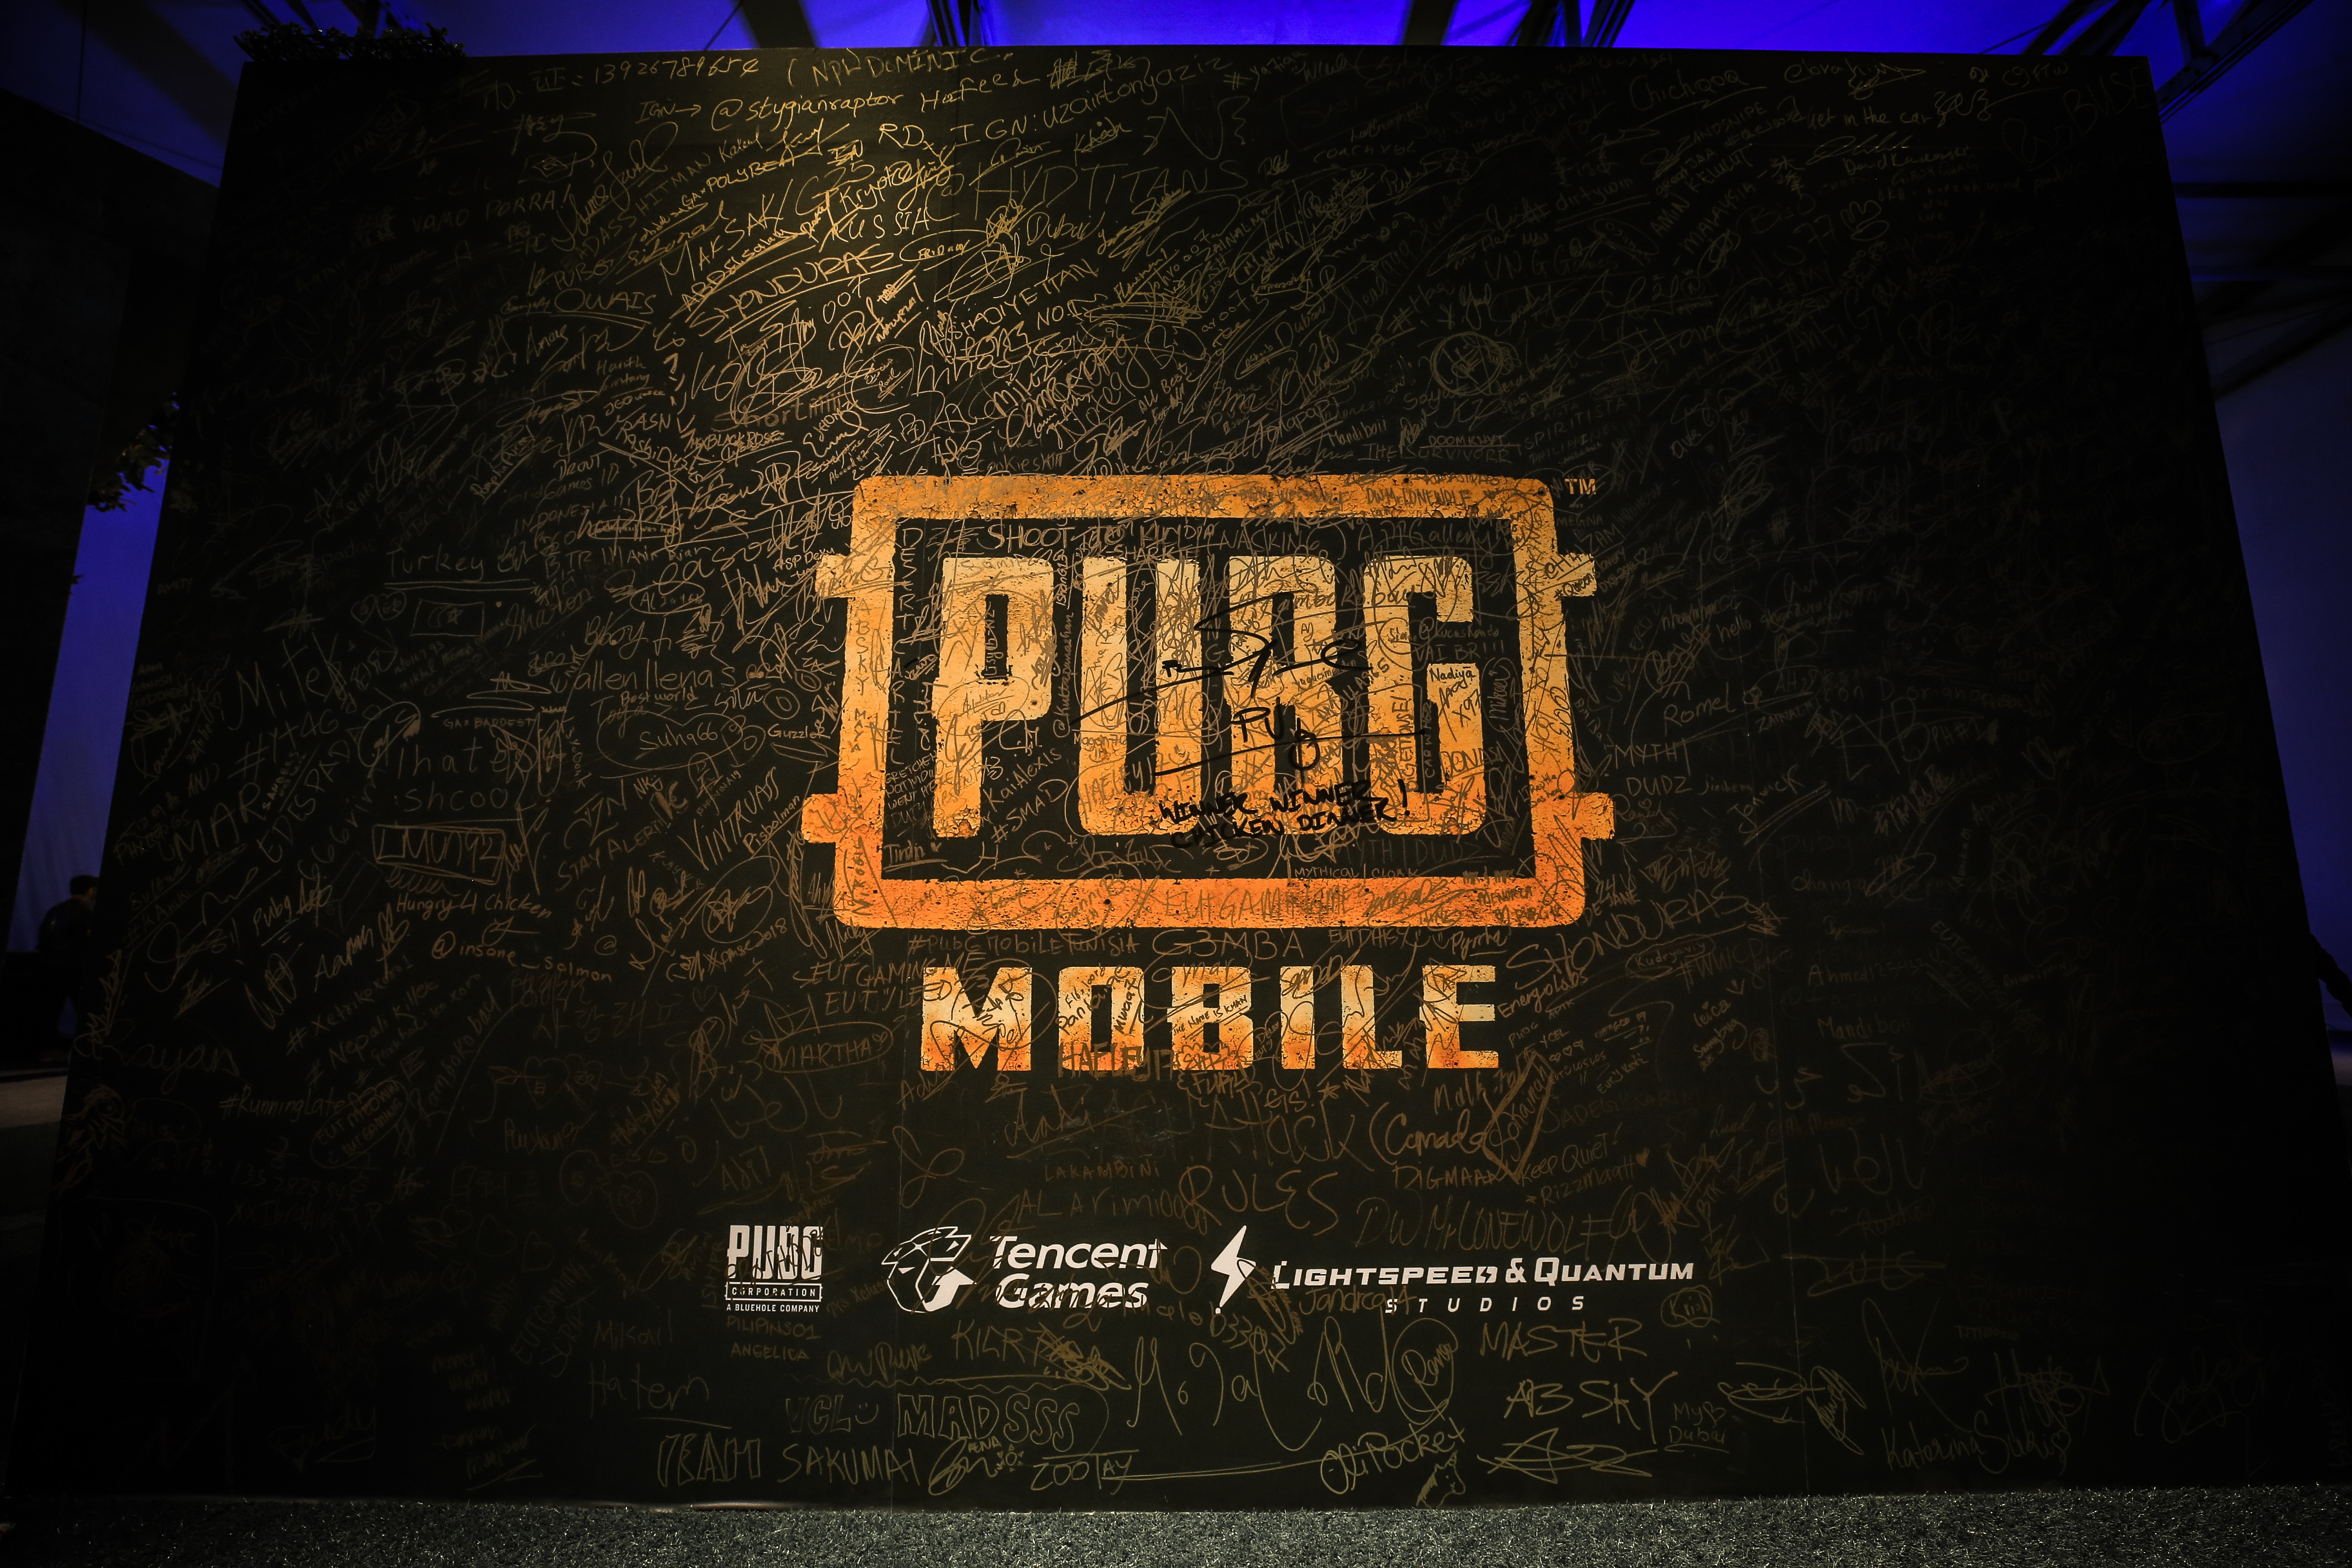  The PUBG MOBILE Star Challenge 2018 Global Finals still